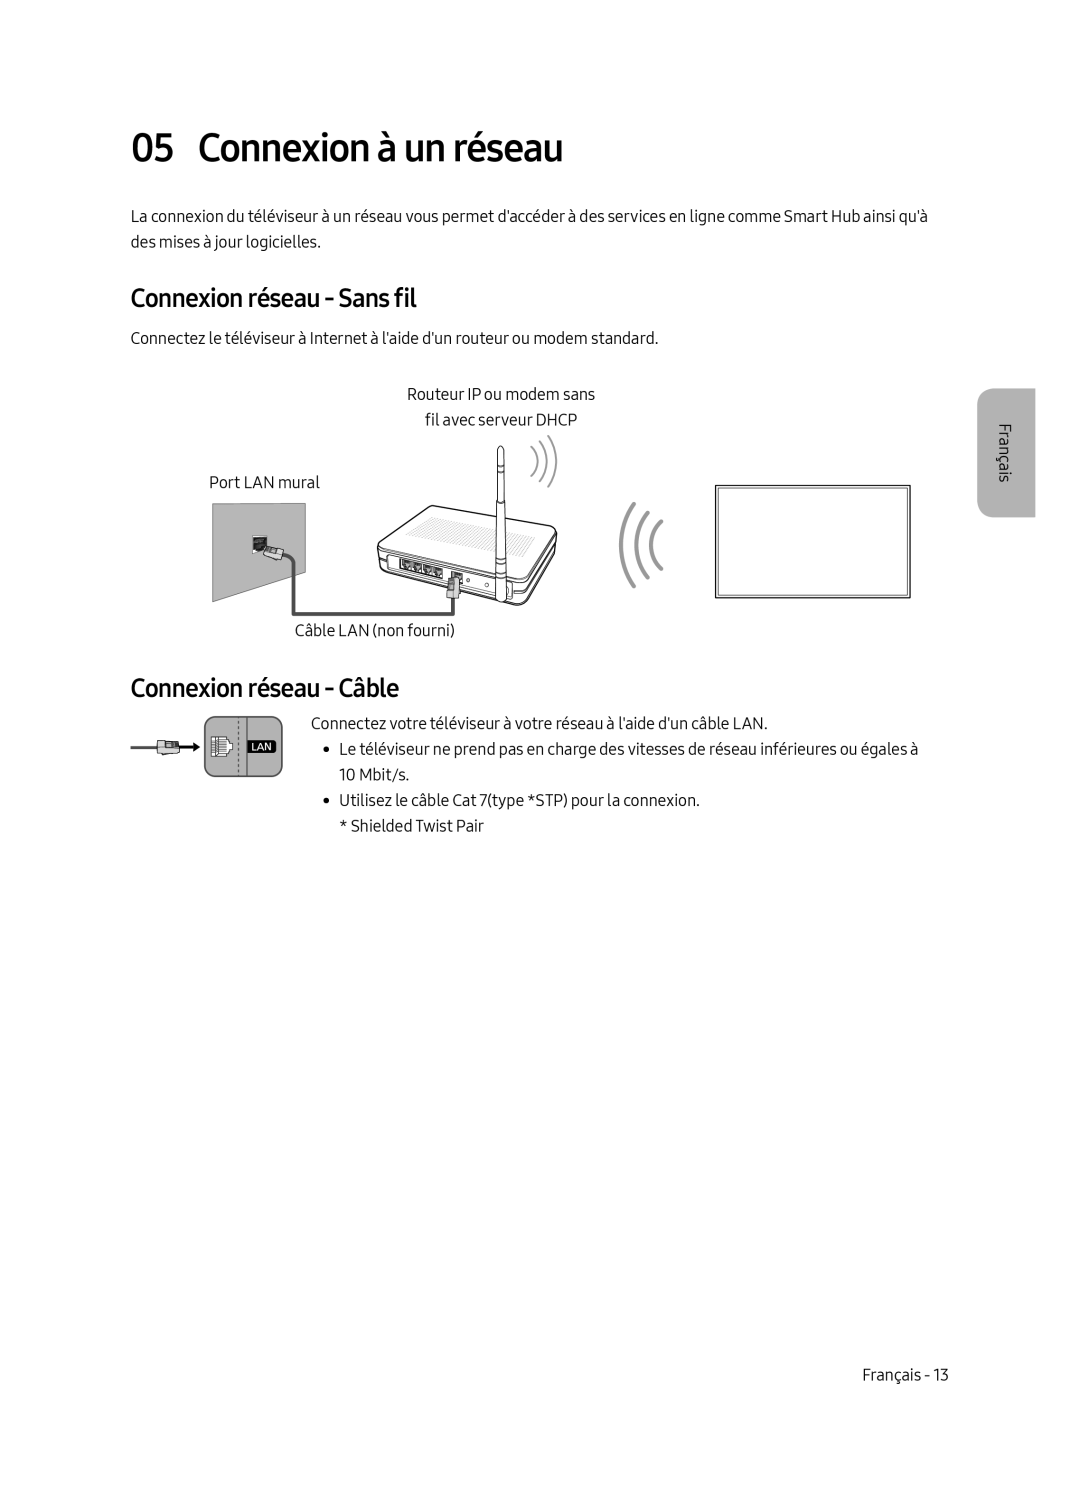 Samsung UE75MU6170UXZG, UE65MU6179UXZG manual Connexion à un réseau, Connexion réseau - Sans fil, Connexion réseau - Câble 